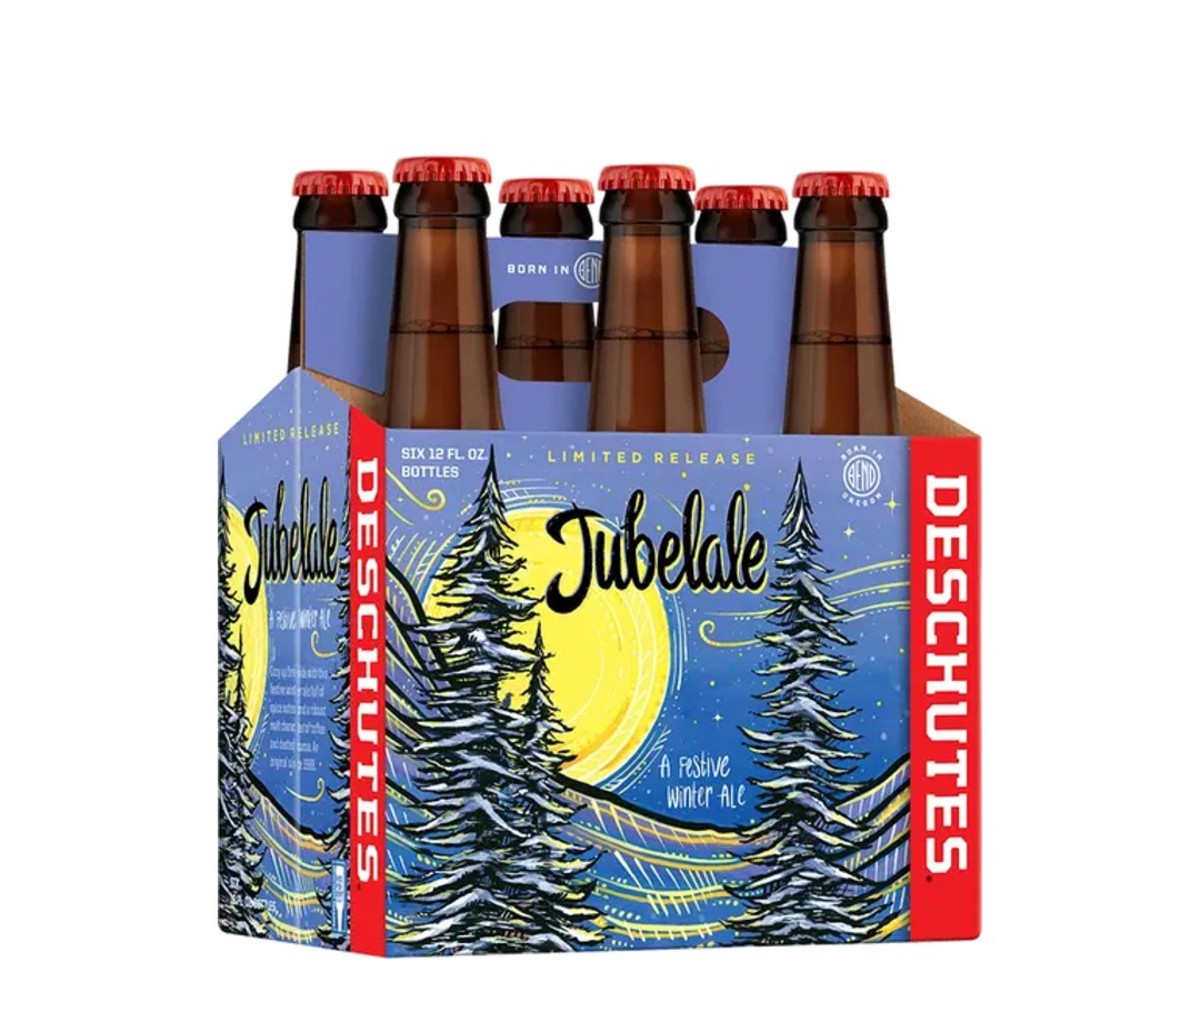 Jubelale Festive Winter Ale - Deschutes Brewery